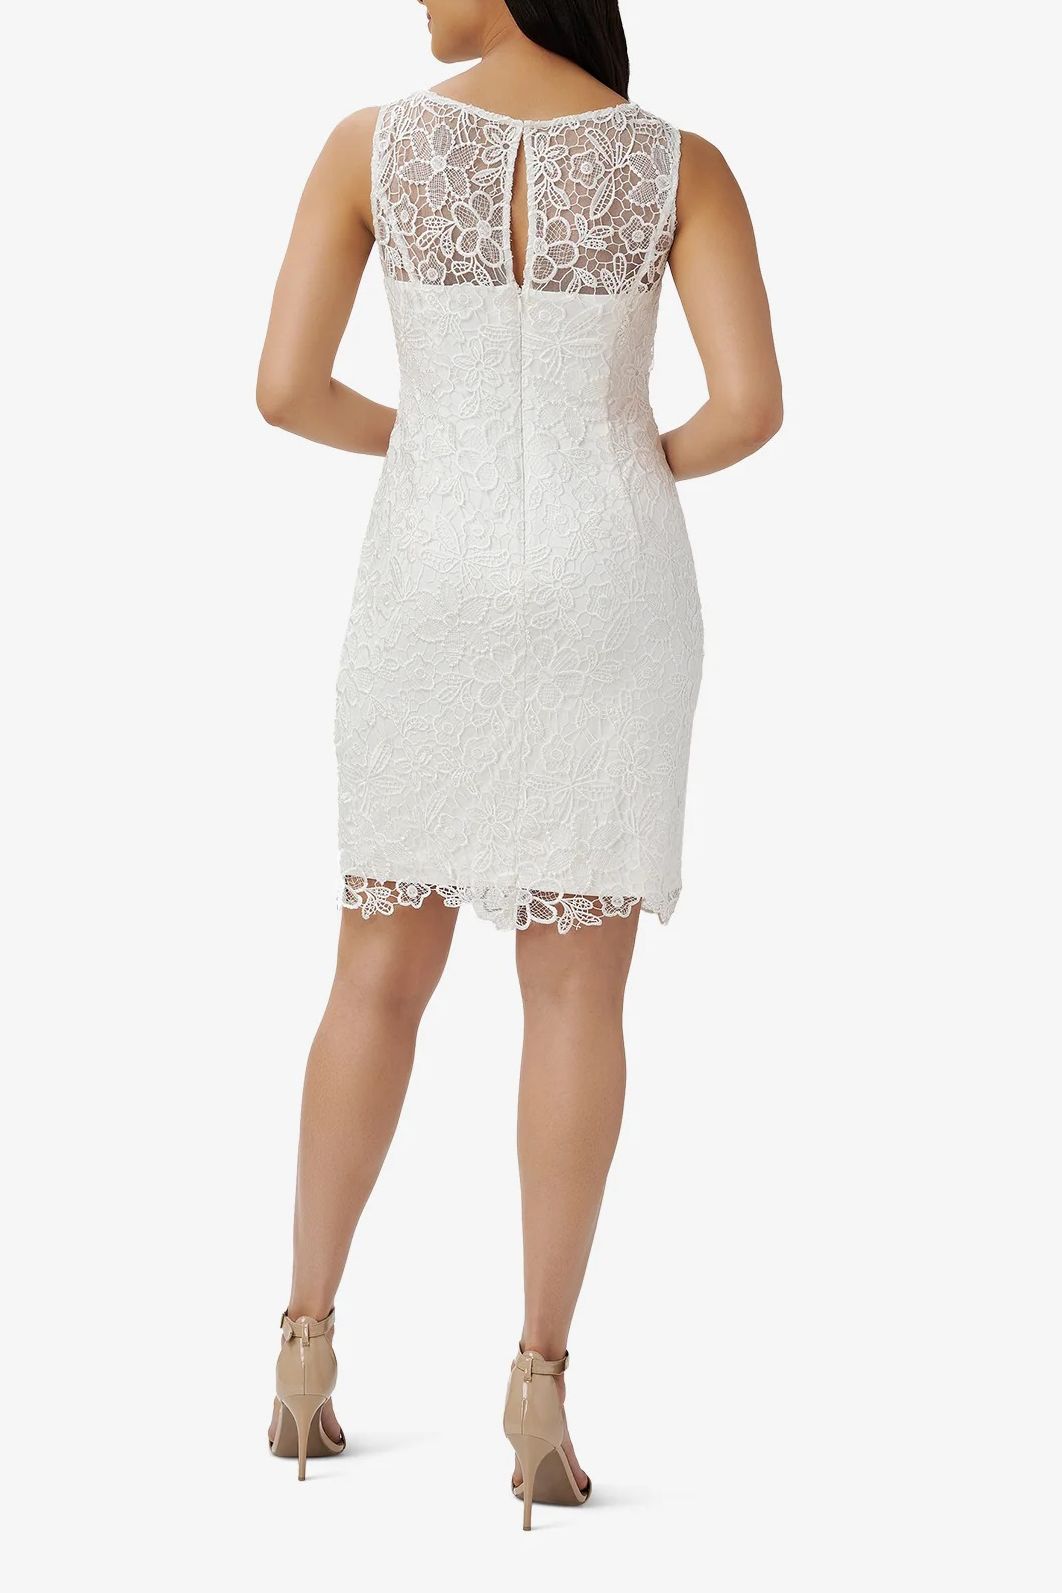 Adrianna Papell Elegant Mesmerizing Ivory Dress